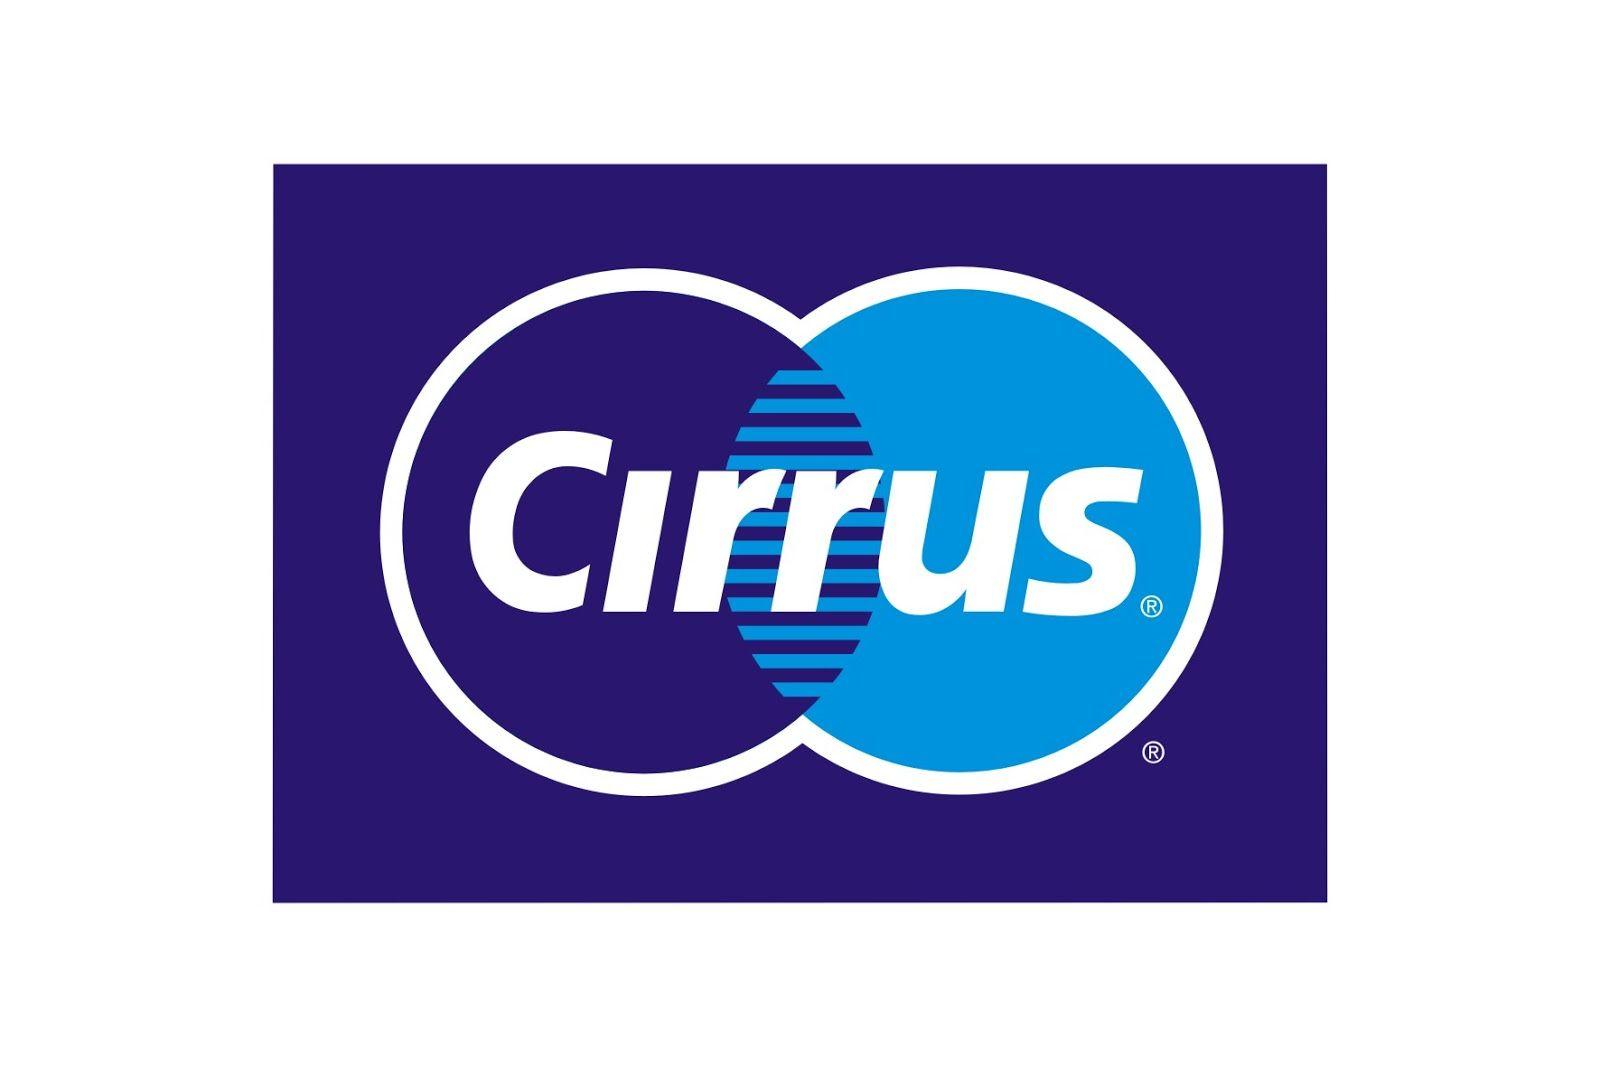 Cirrus Logo - Cirrus Logo